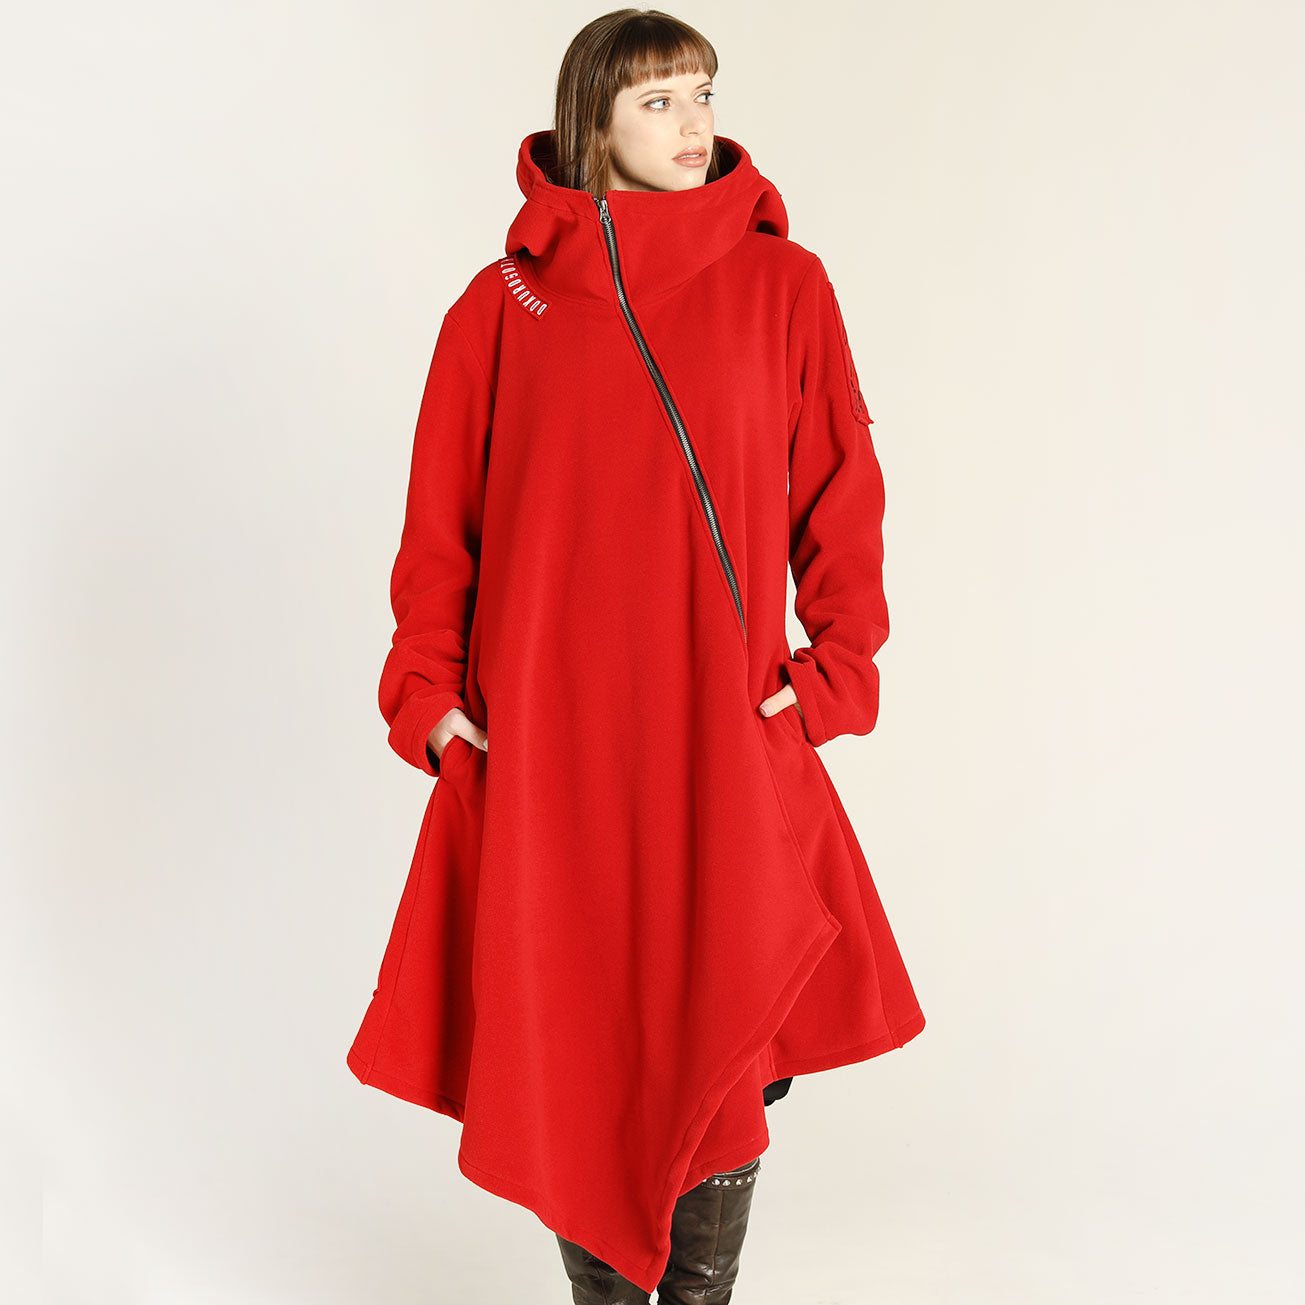 Asymmetric Red Long Hoodie (2サイズ)